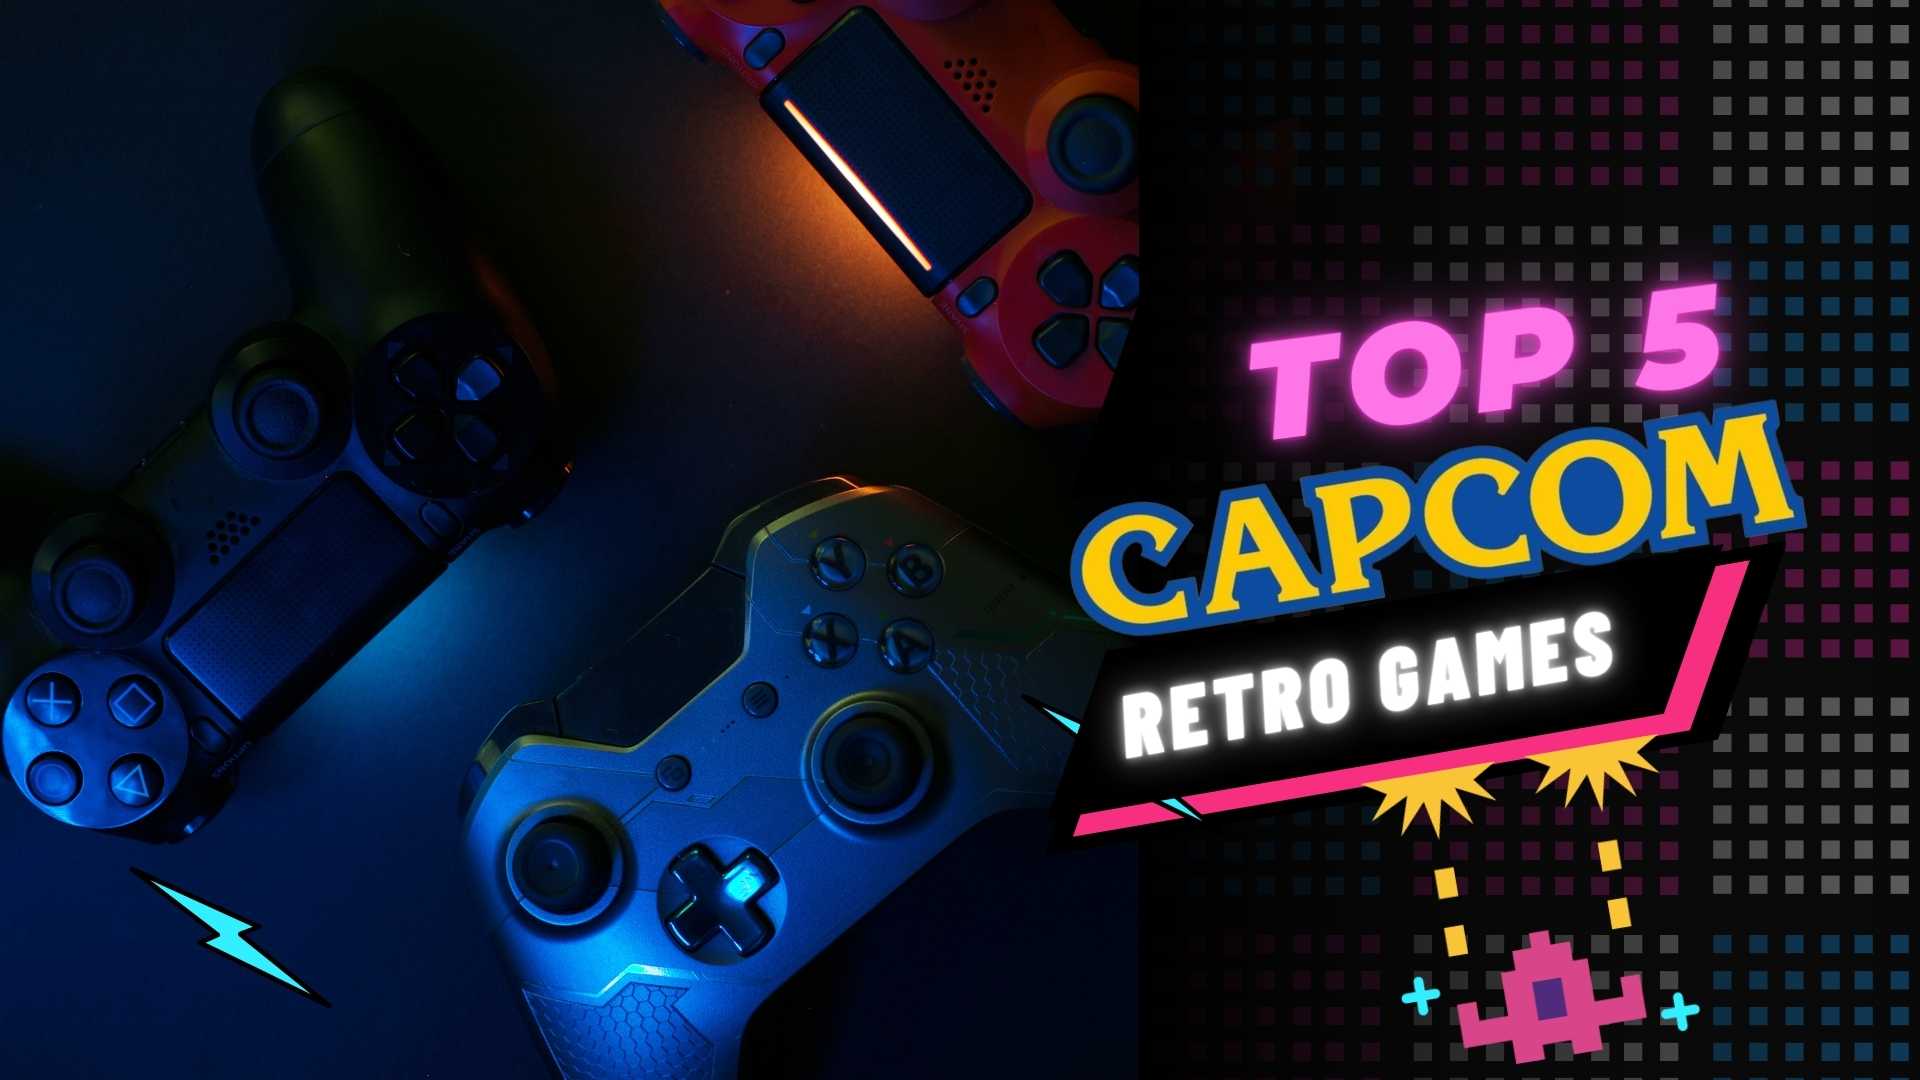 Top 5 Capcom video games according to Gamestate - Gamestate